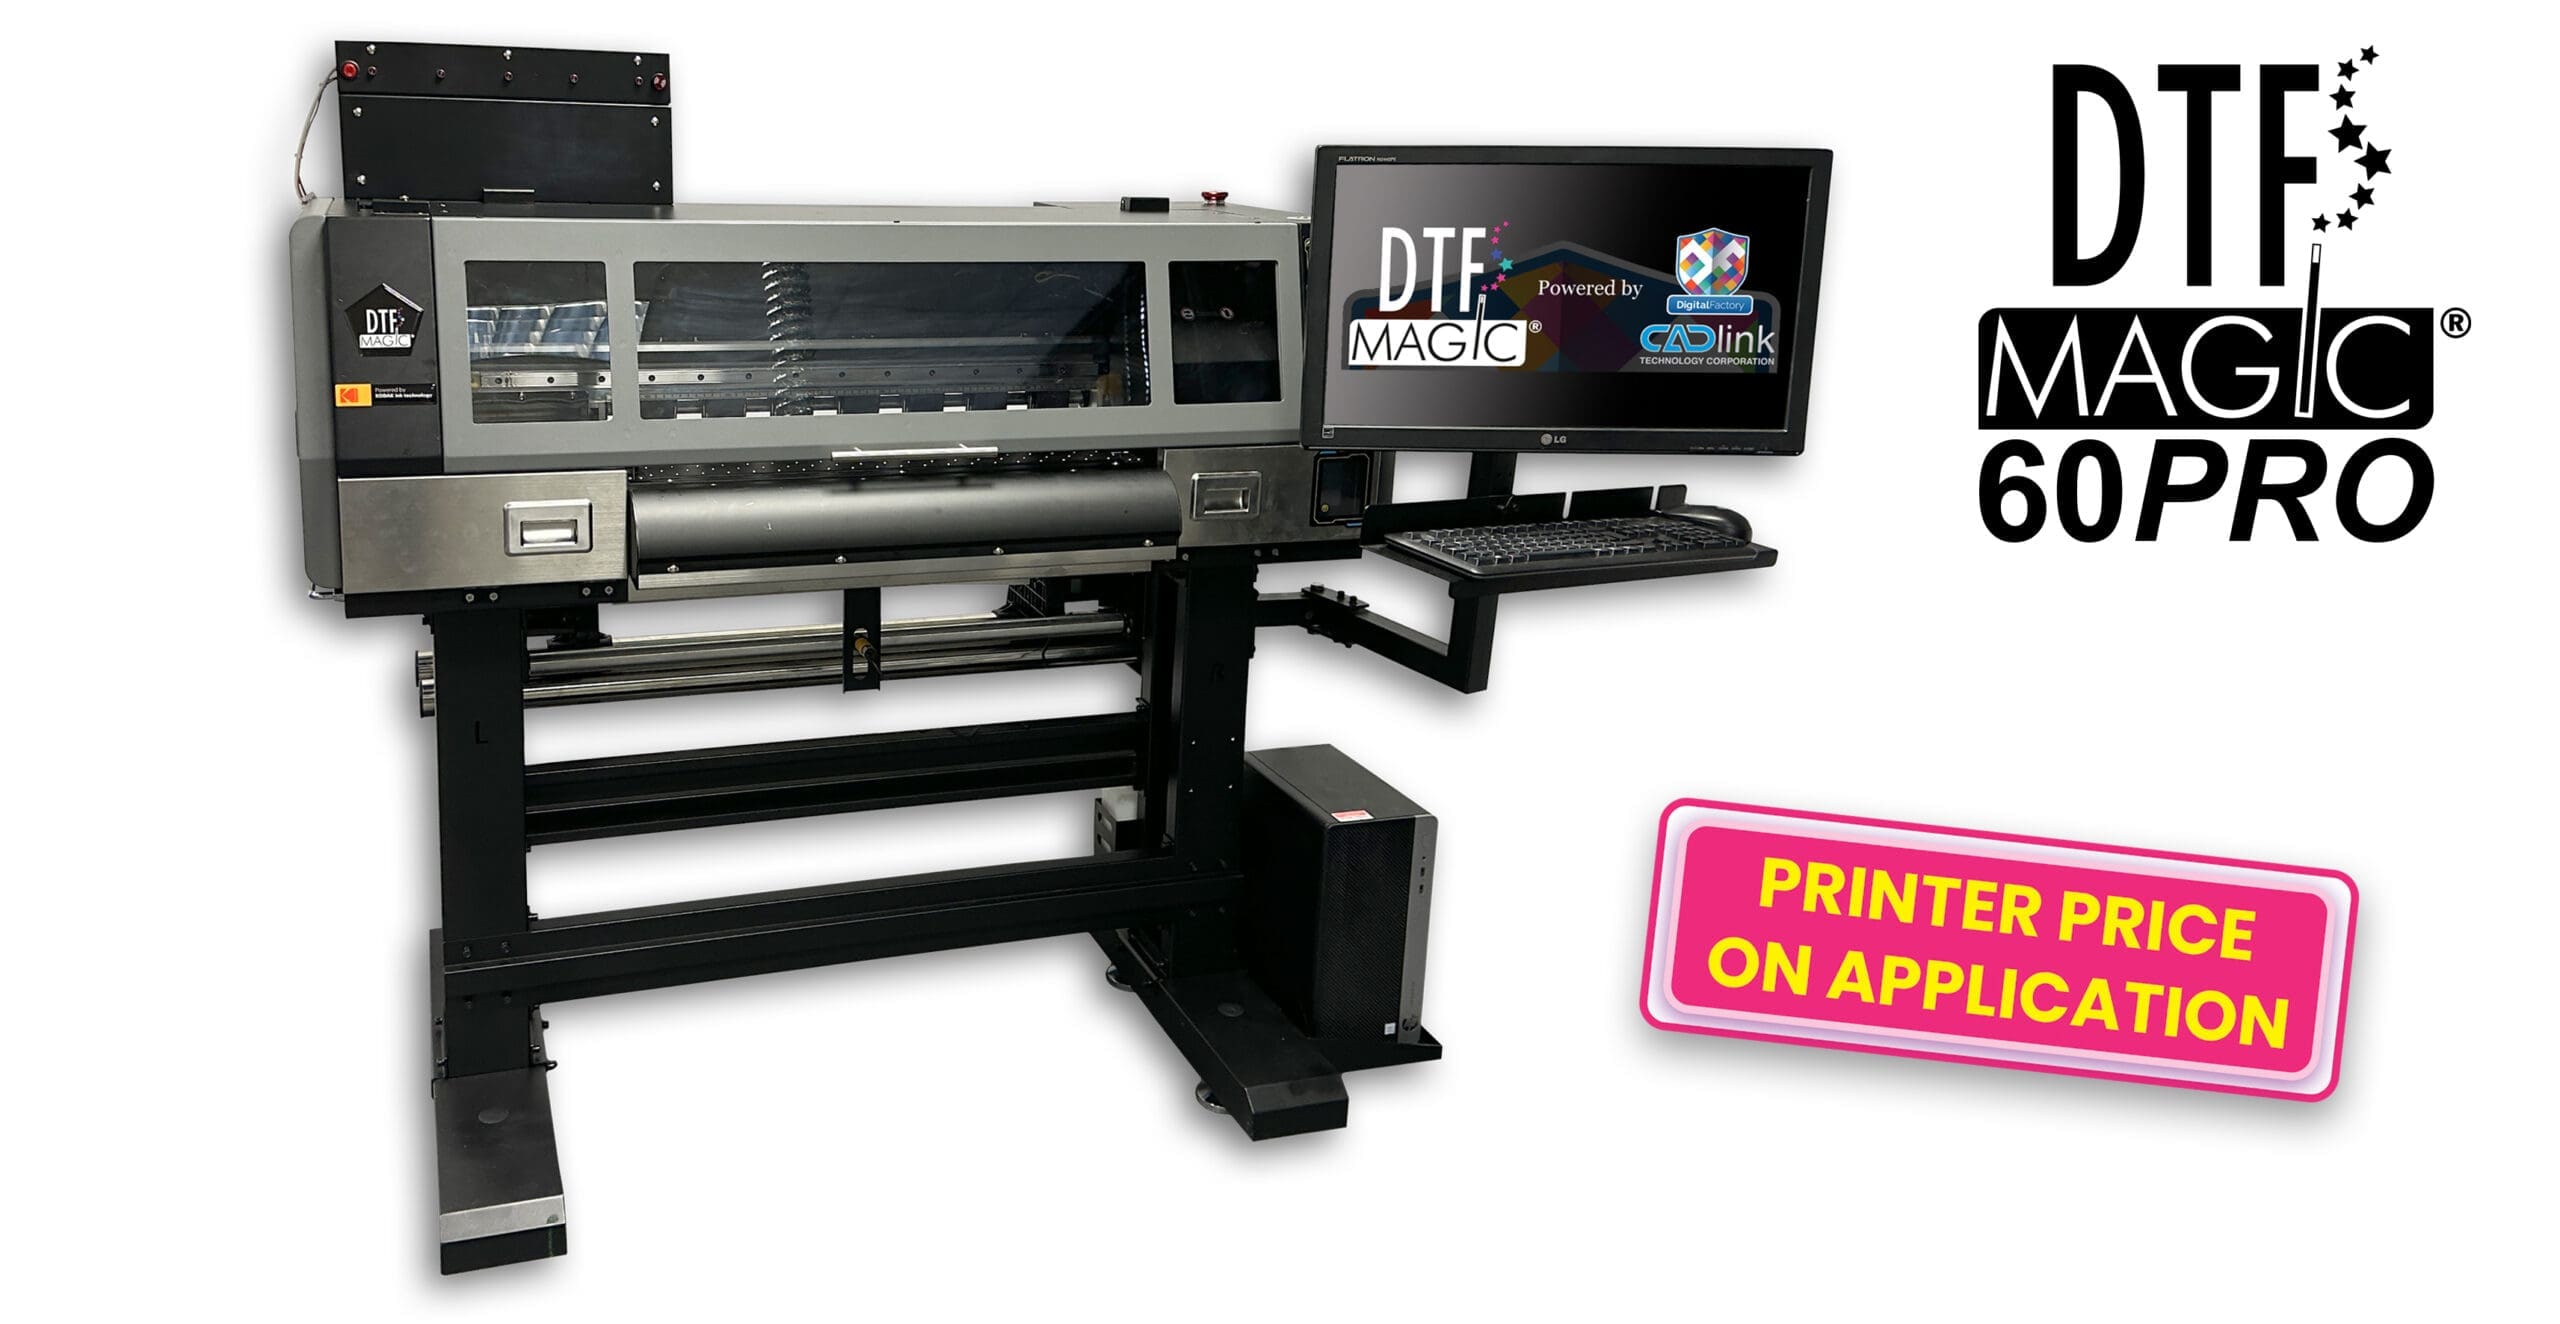 DTF Magic 60PRO Printer